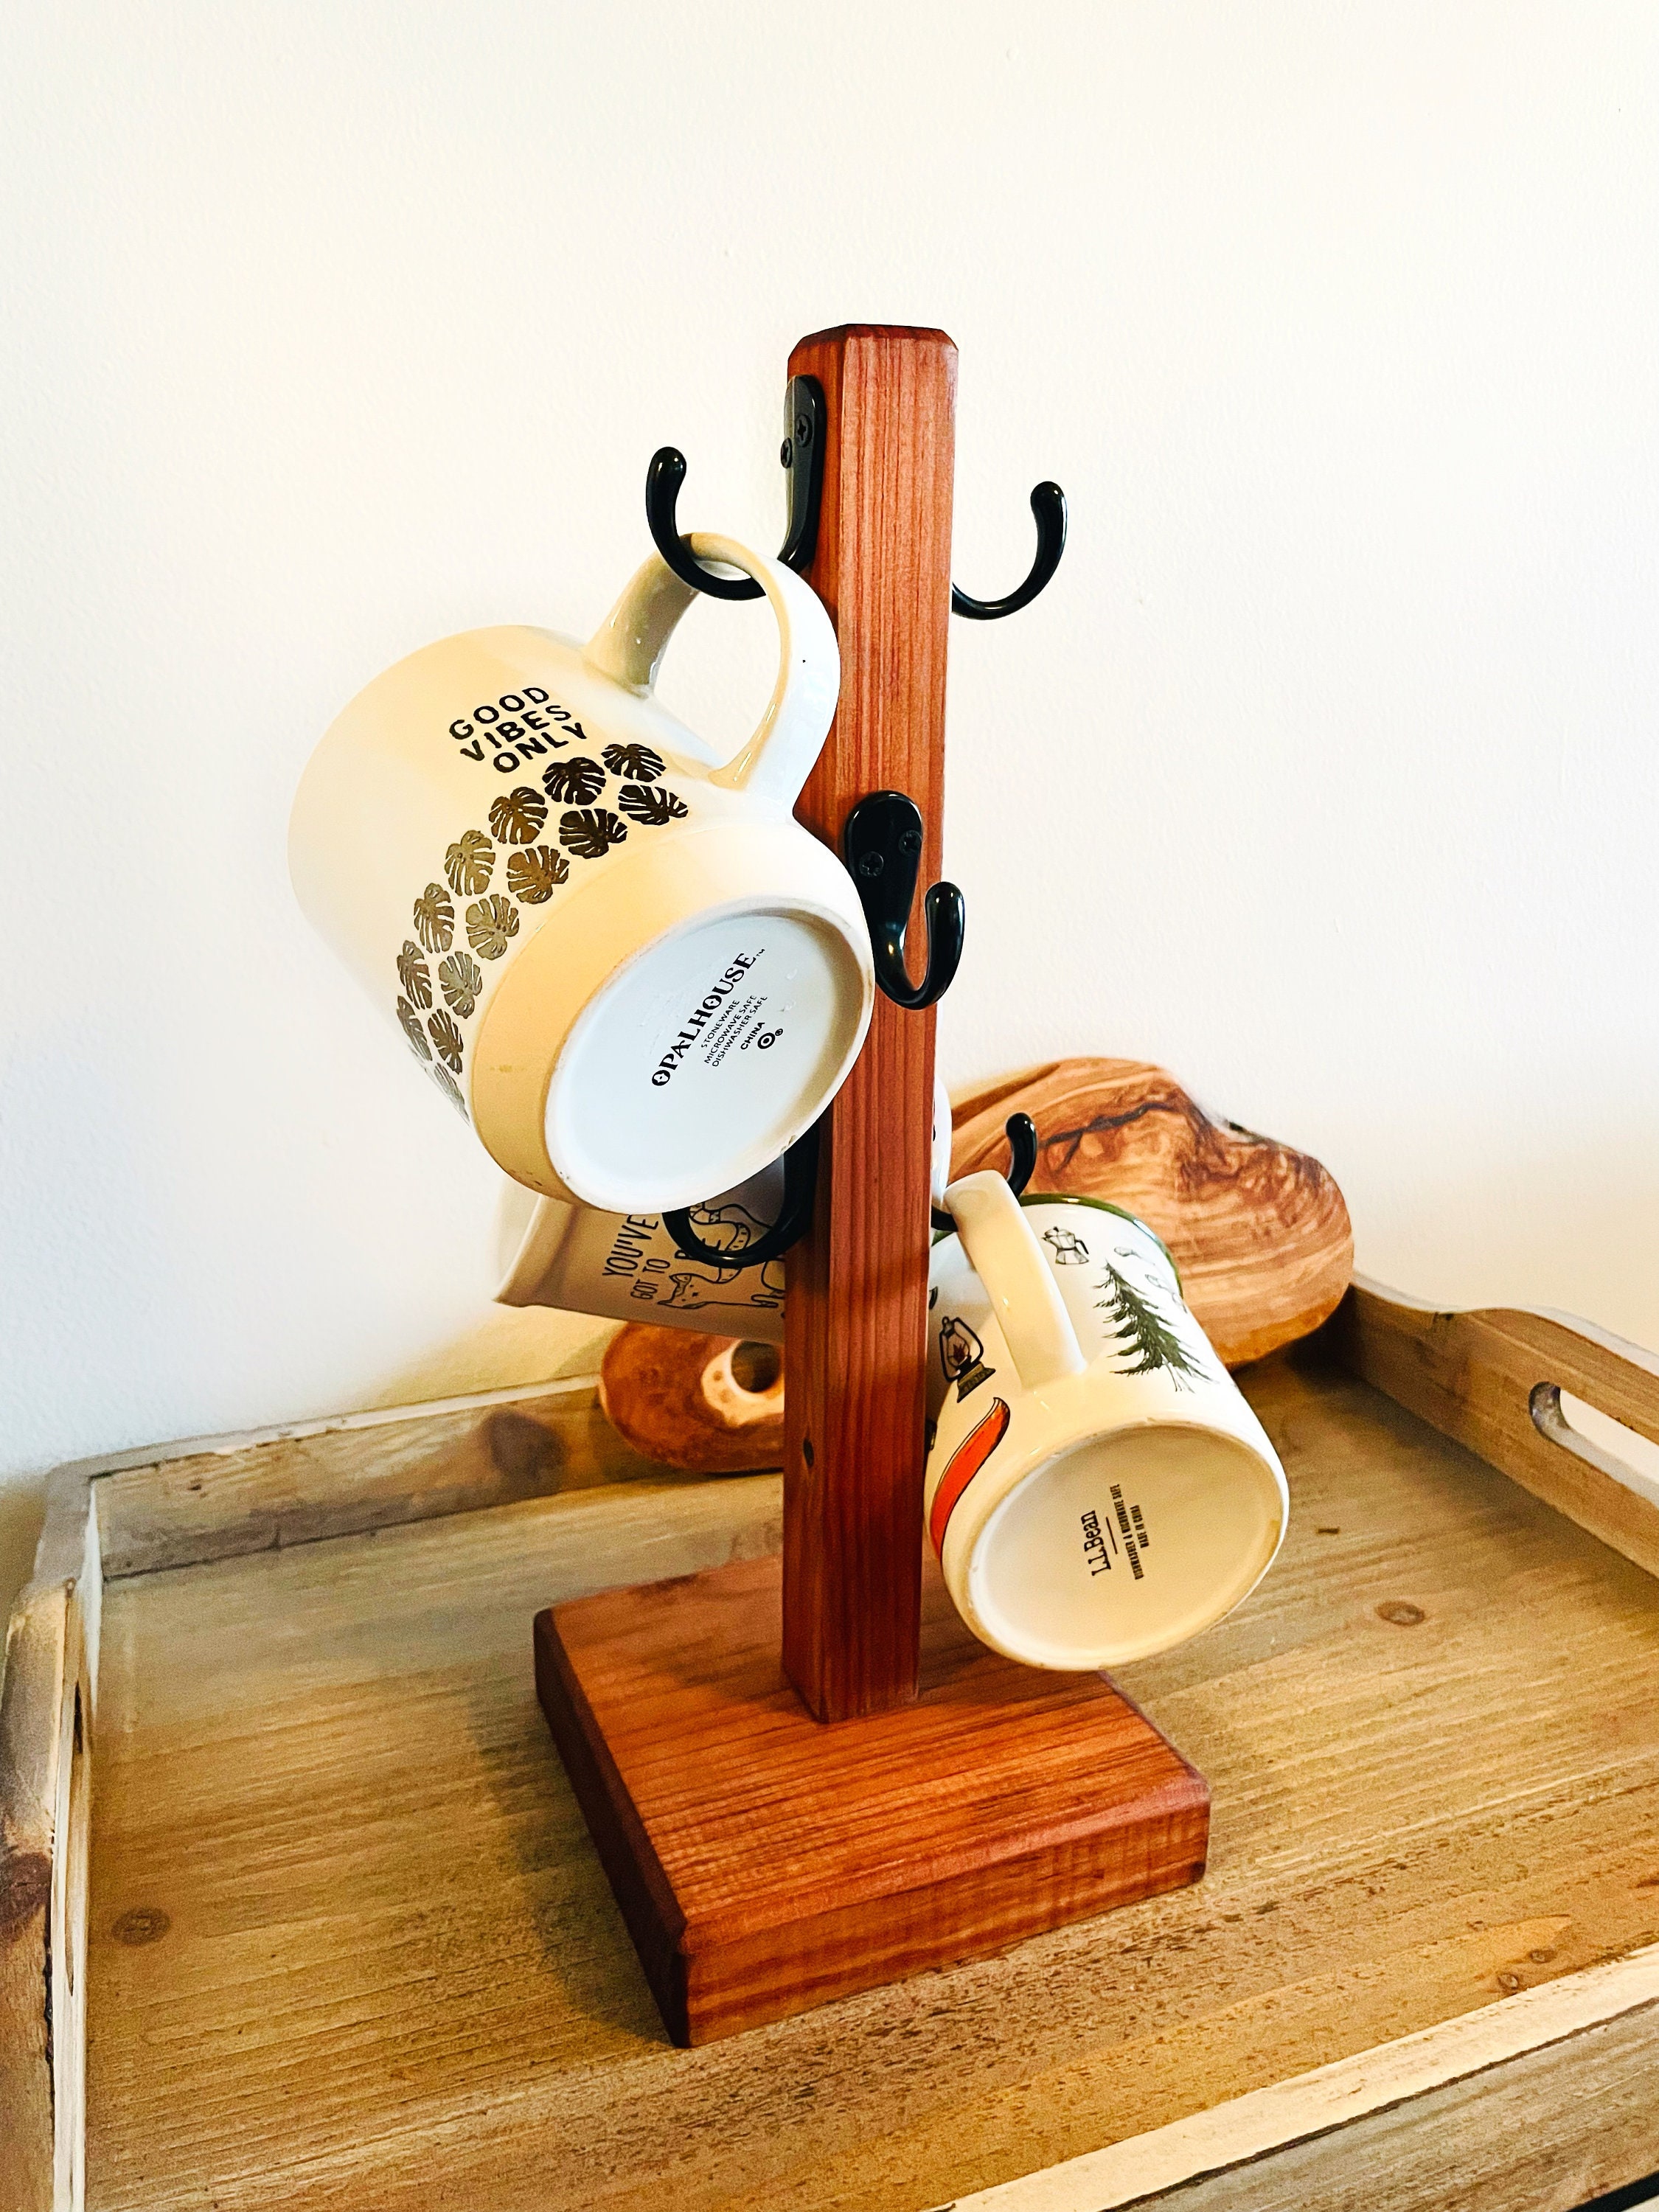 Coffee Mug Stand Rae Dunn Inspired 6 Hook Mug Tree Solid Wood